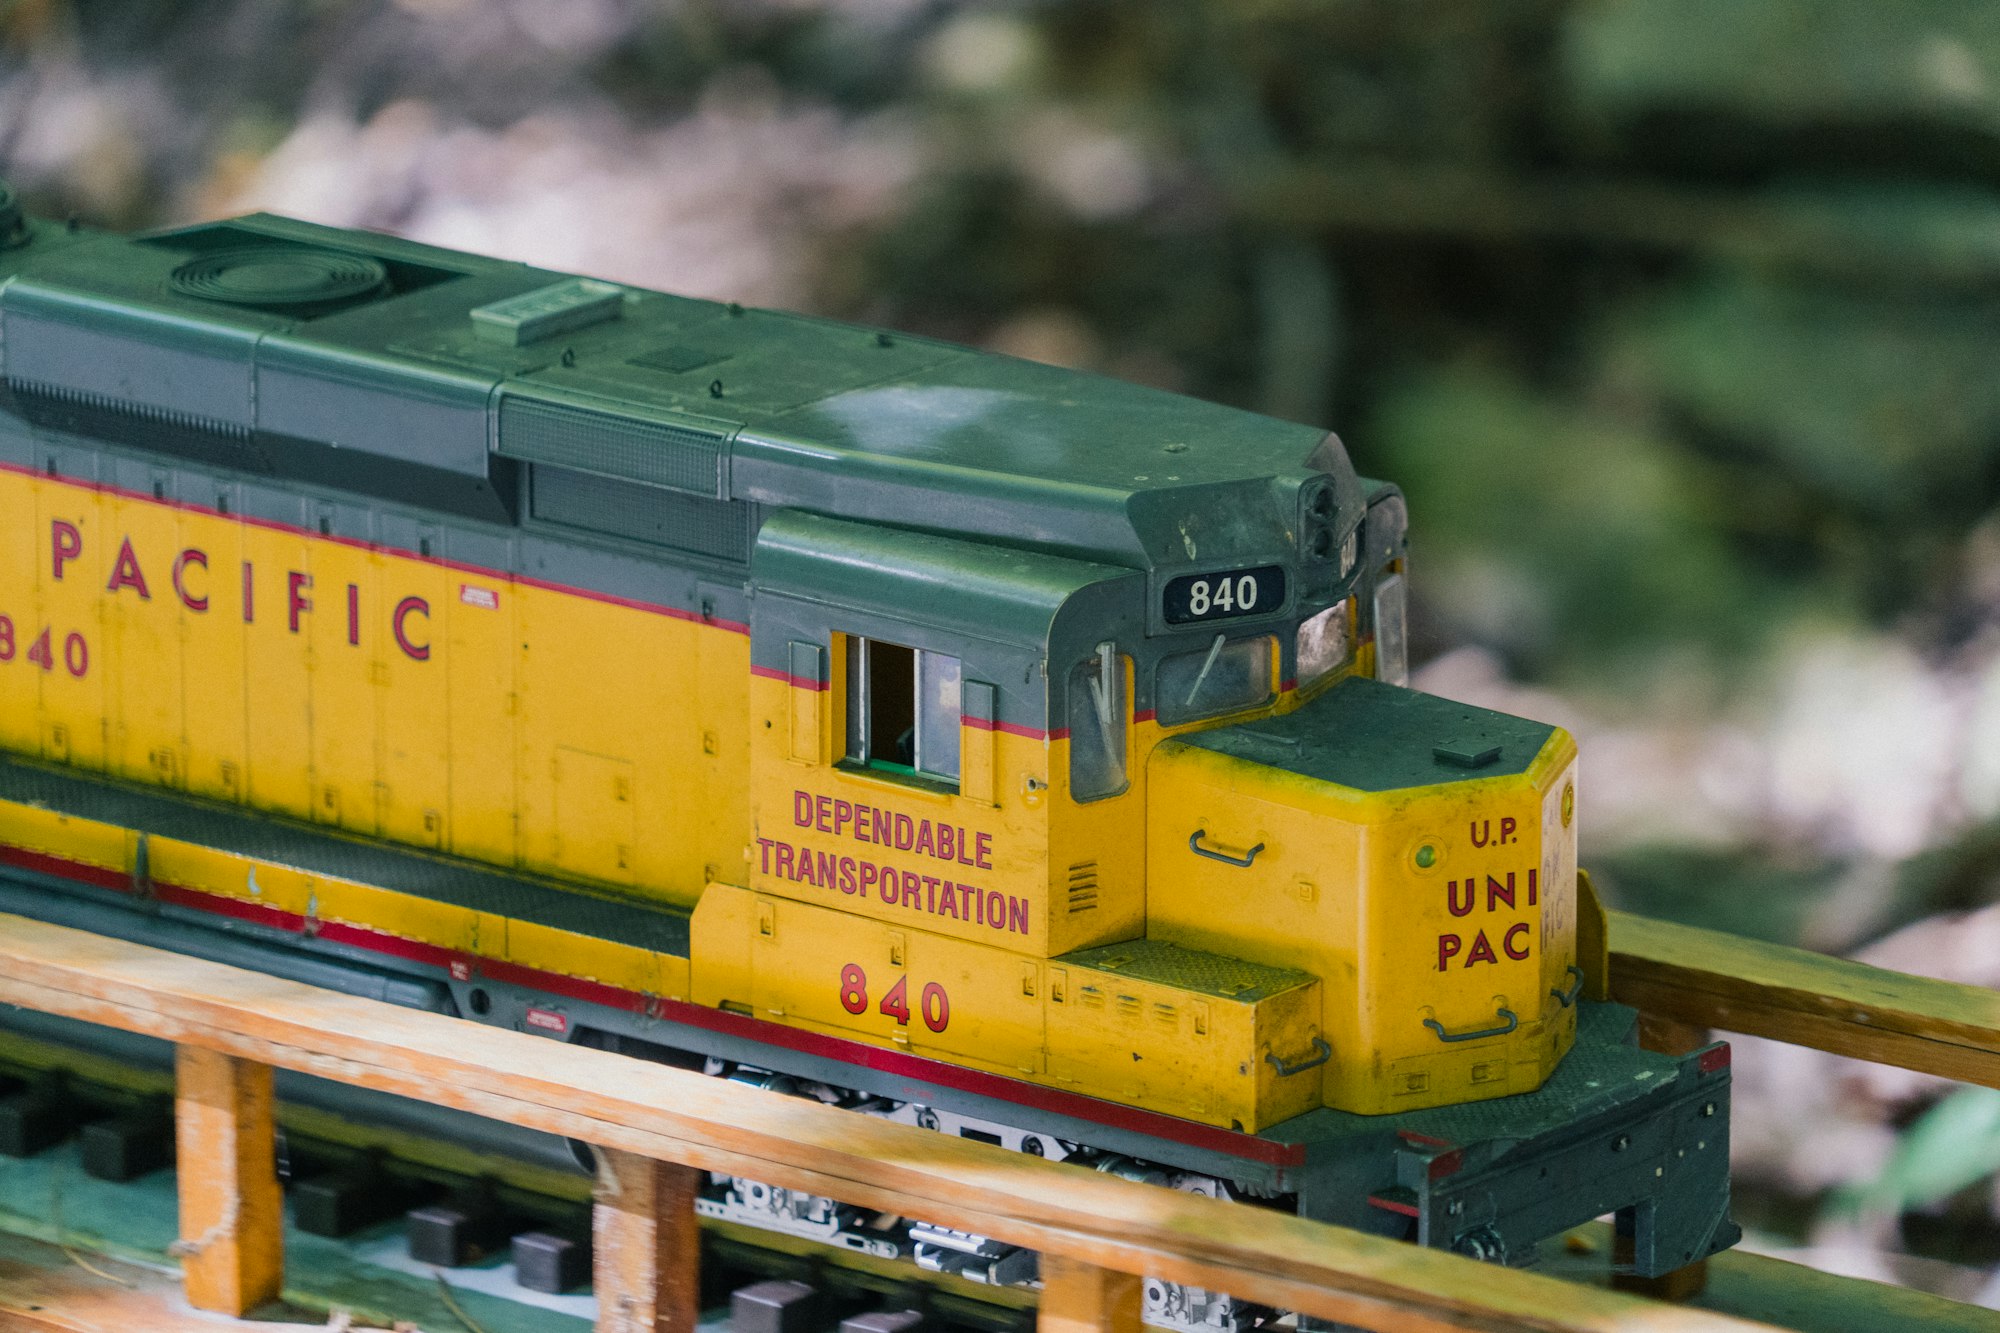 Union Pacific HO scale model train locomotive